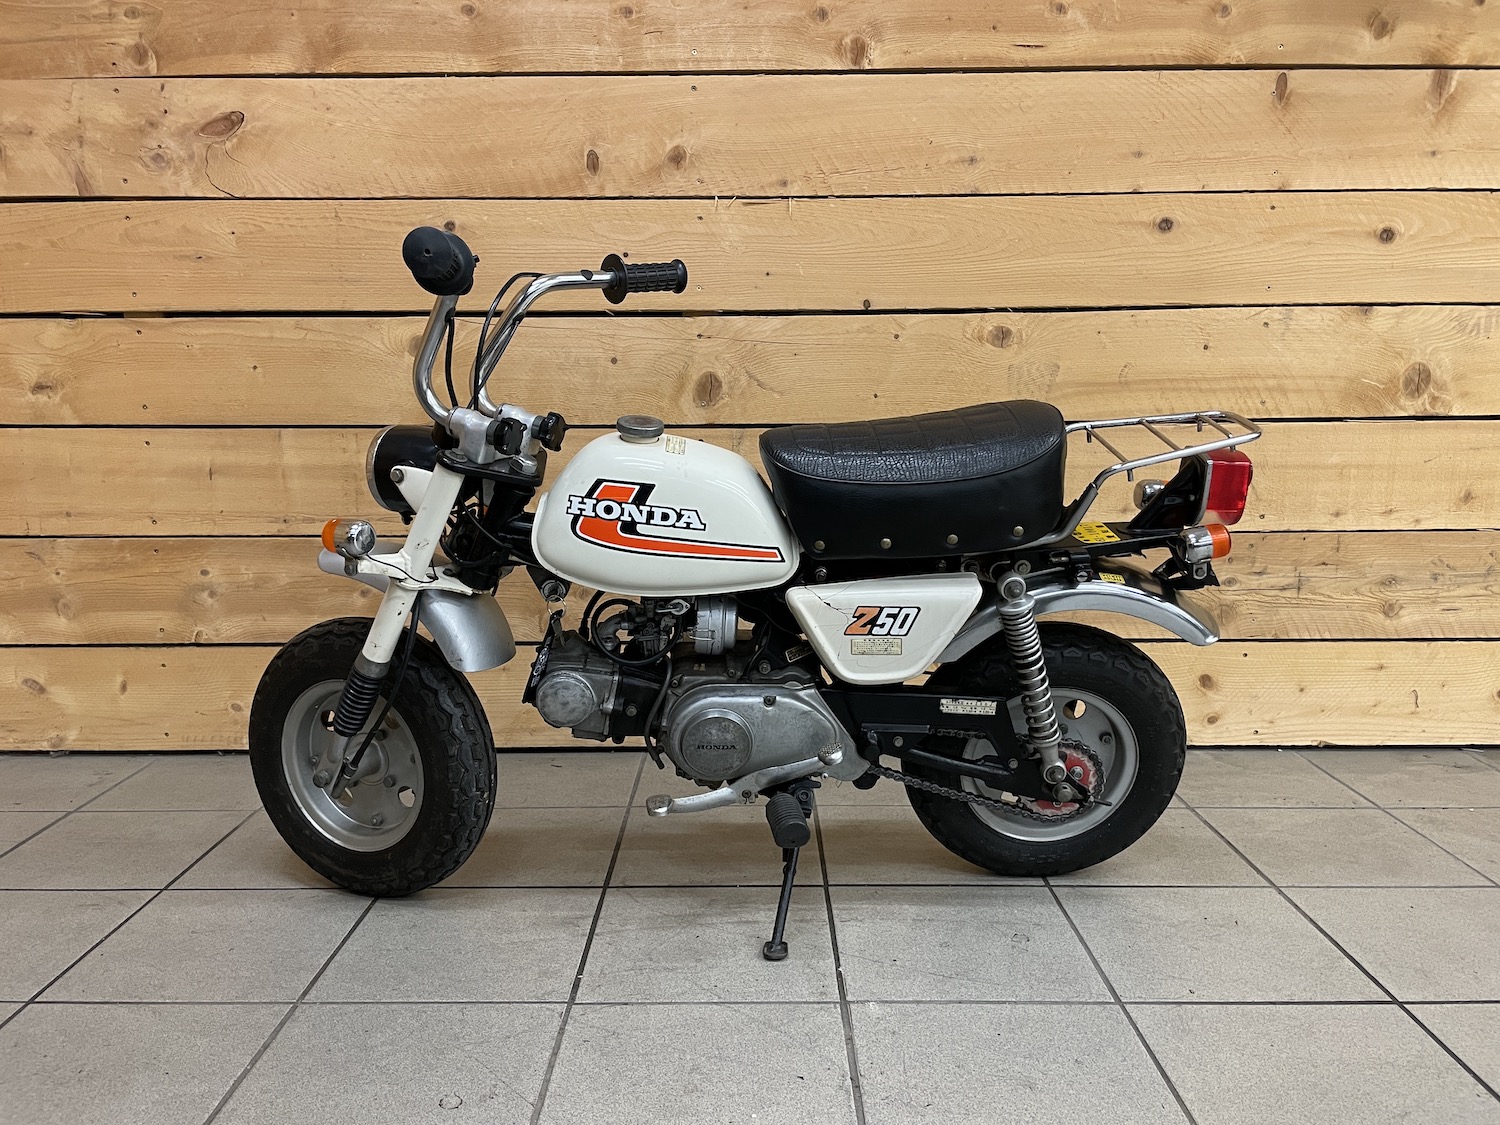 Honda_Monkey_Z50J_cezanne_classic_motorcycles_9-123.jpg